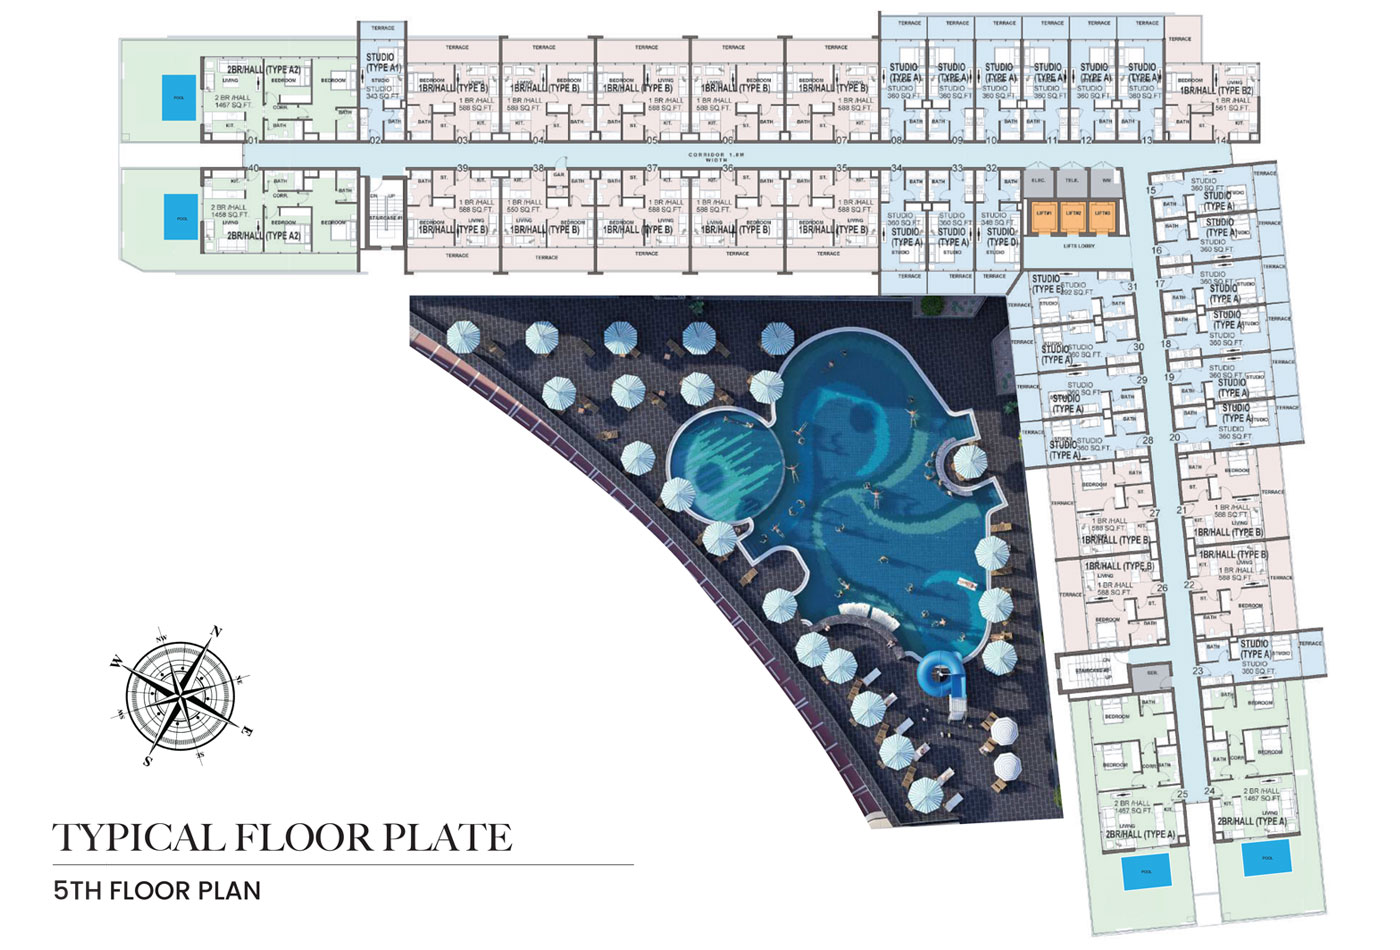 Typical Floor Plan 5th Floor Layout Plan